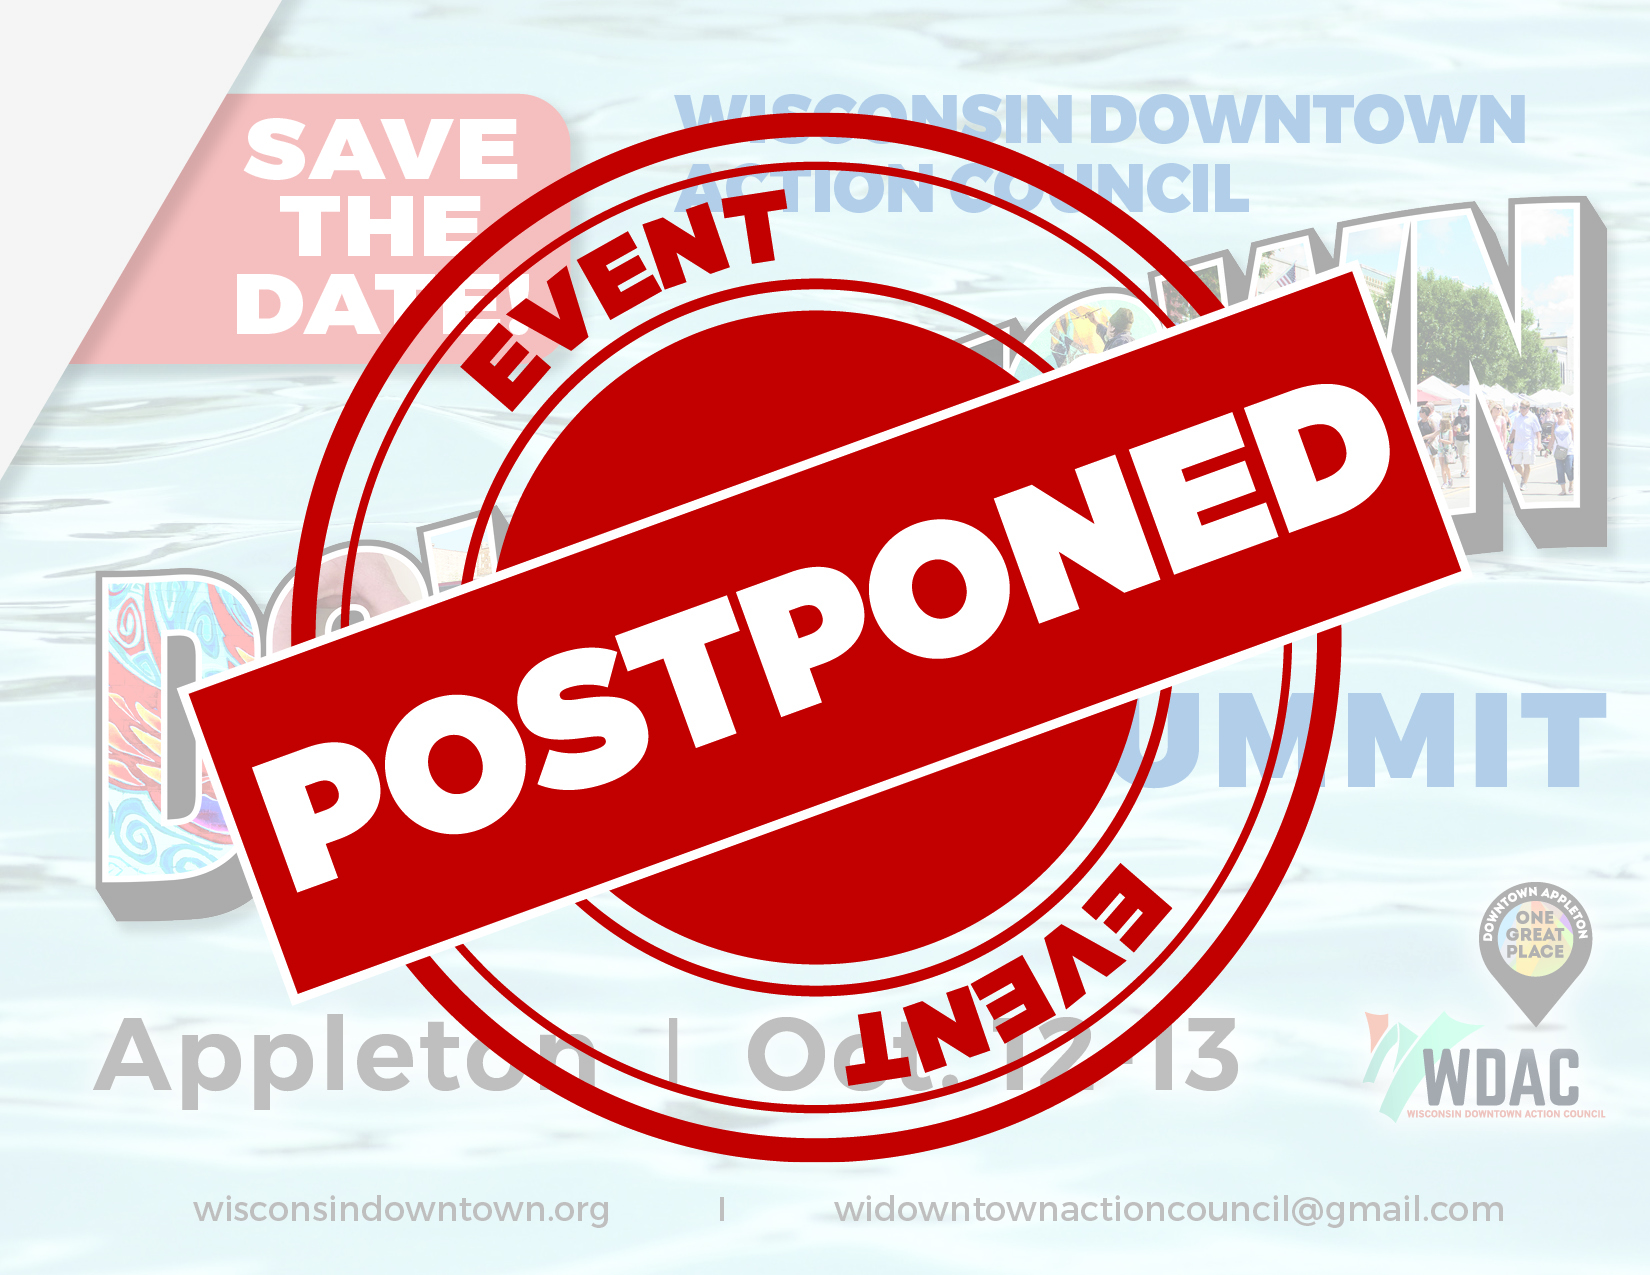 Downtown Summit postponed